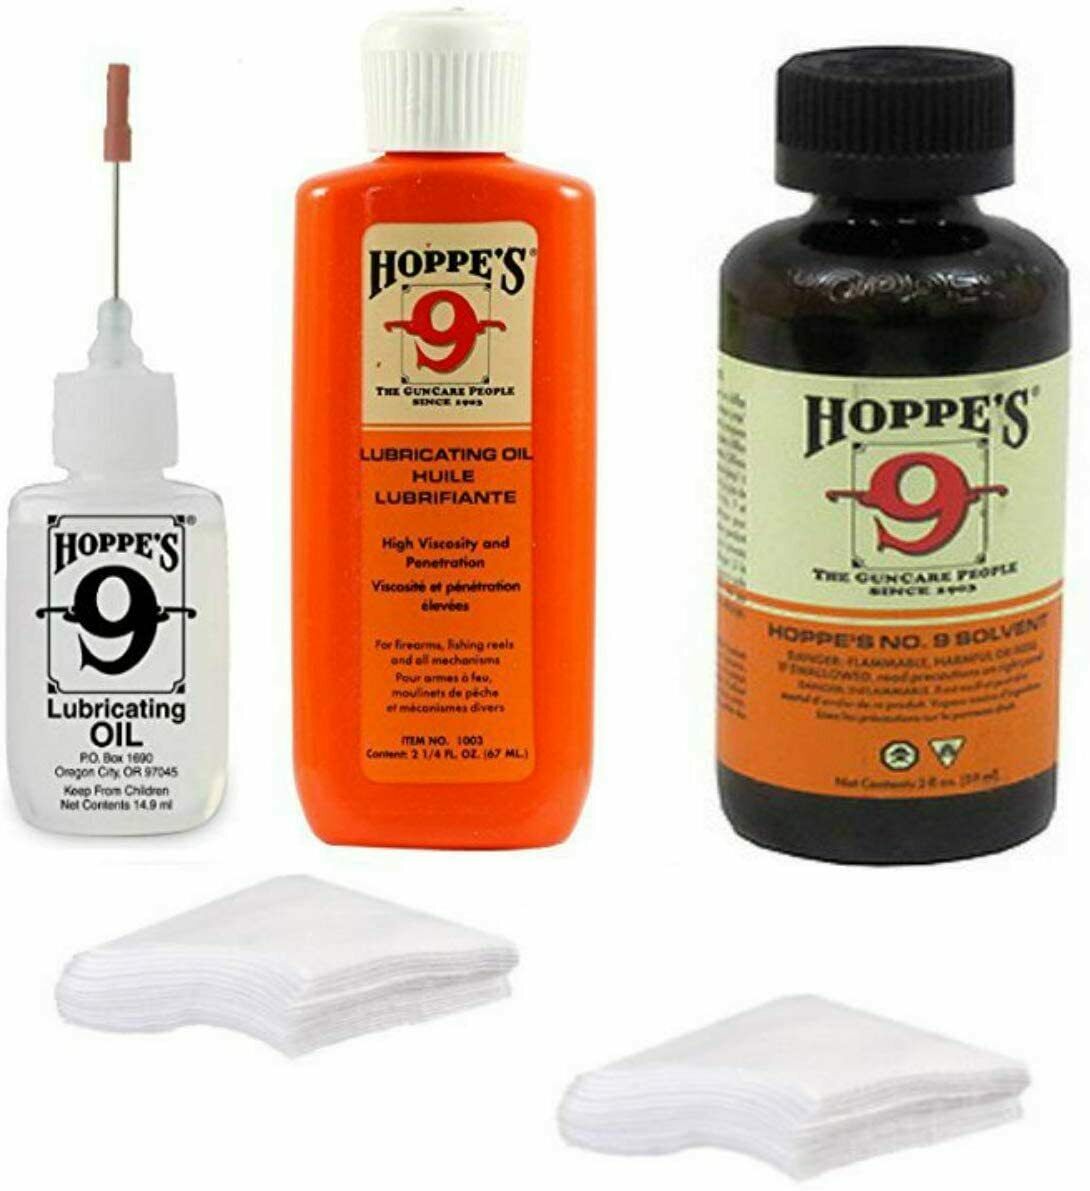 Hoppes Pistol Gun Cleaning Kit - Gun Cleaner - Gun Oil Lube - Cleaning Patches